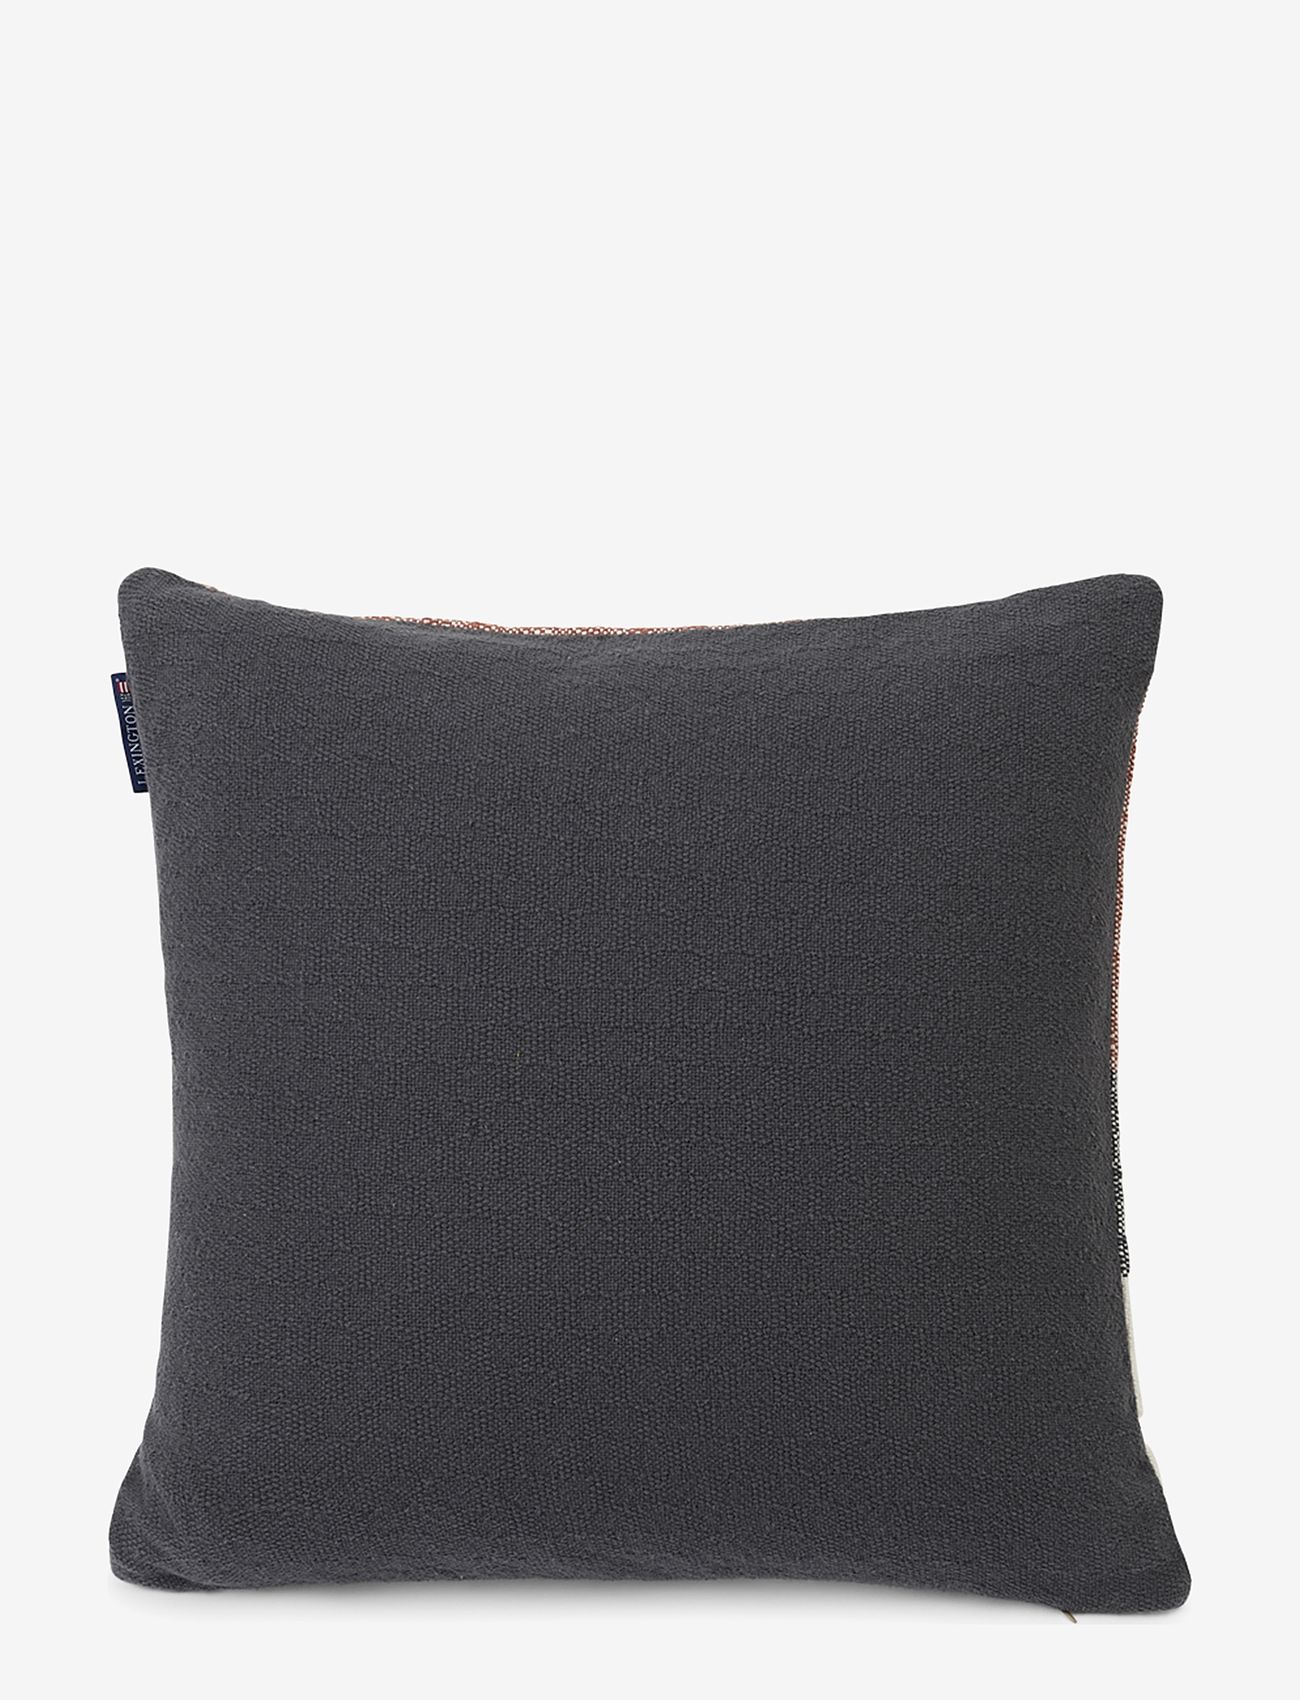 Lexington Home - Vertical Striped Cotton Pillow Cover - najniższe ceny - copper/gray - 1